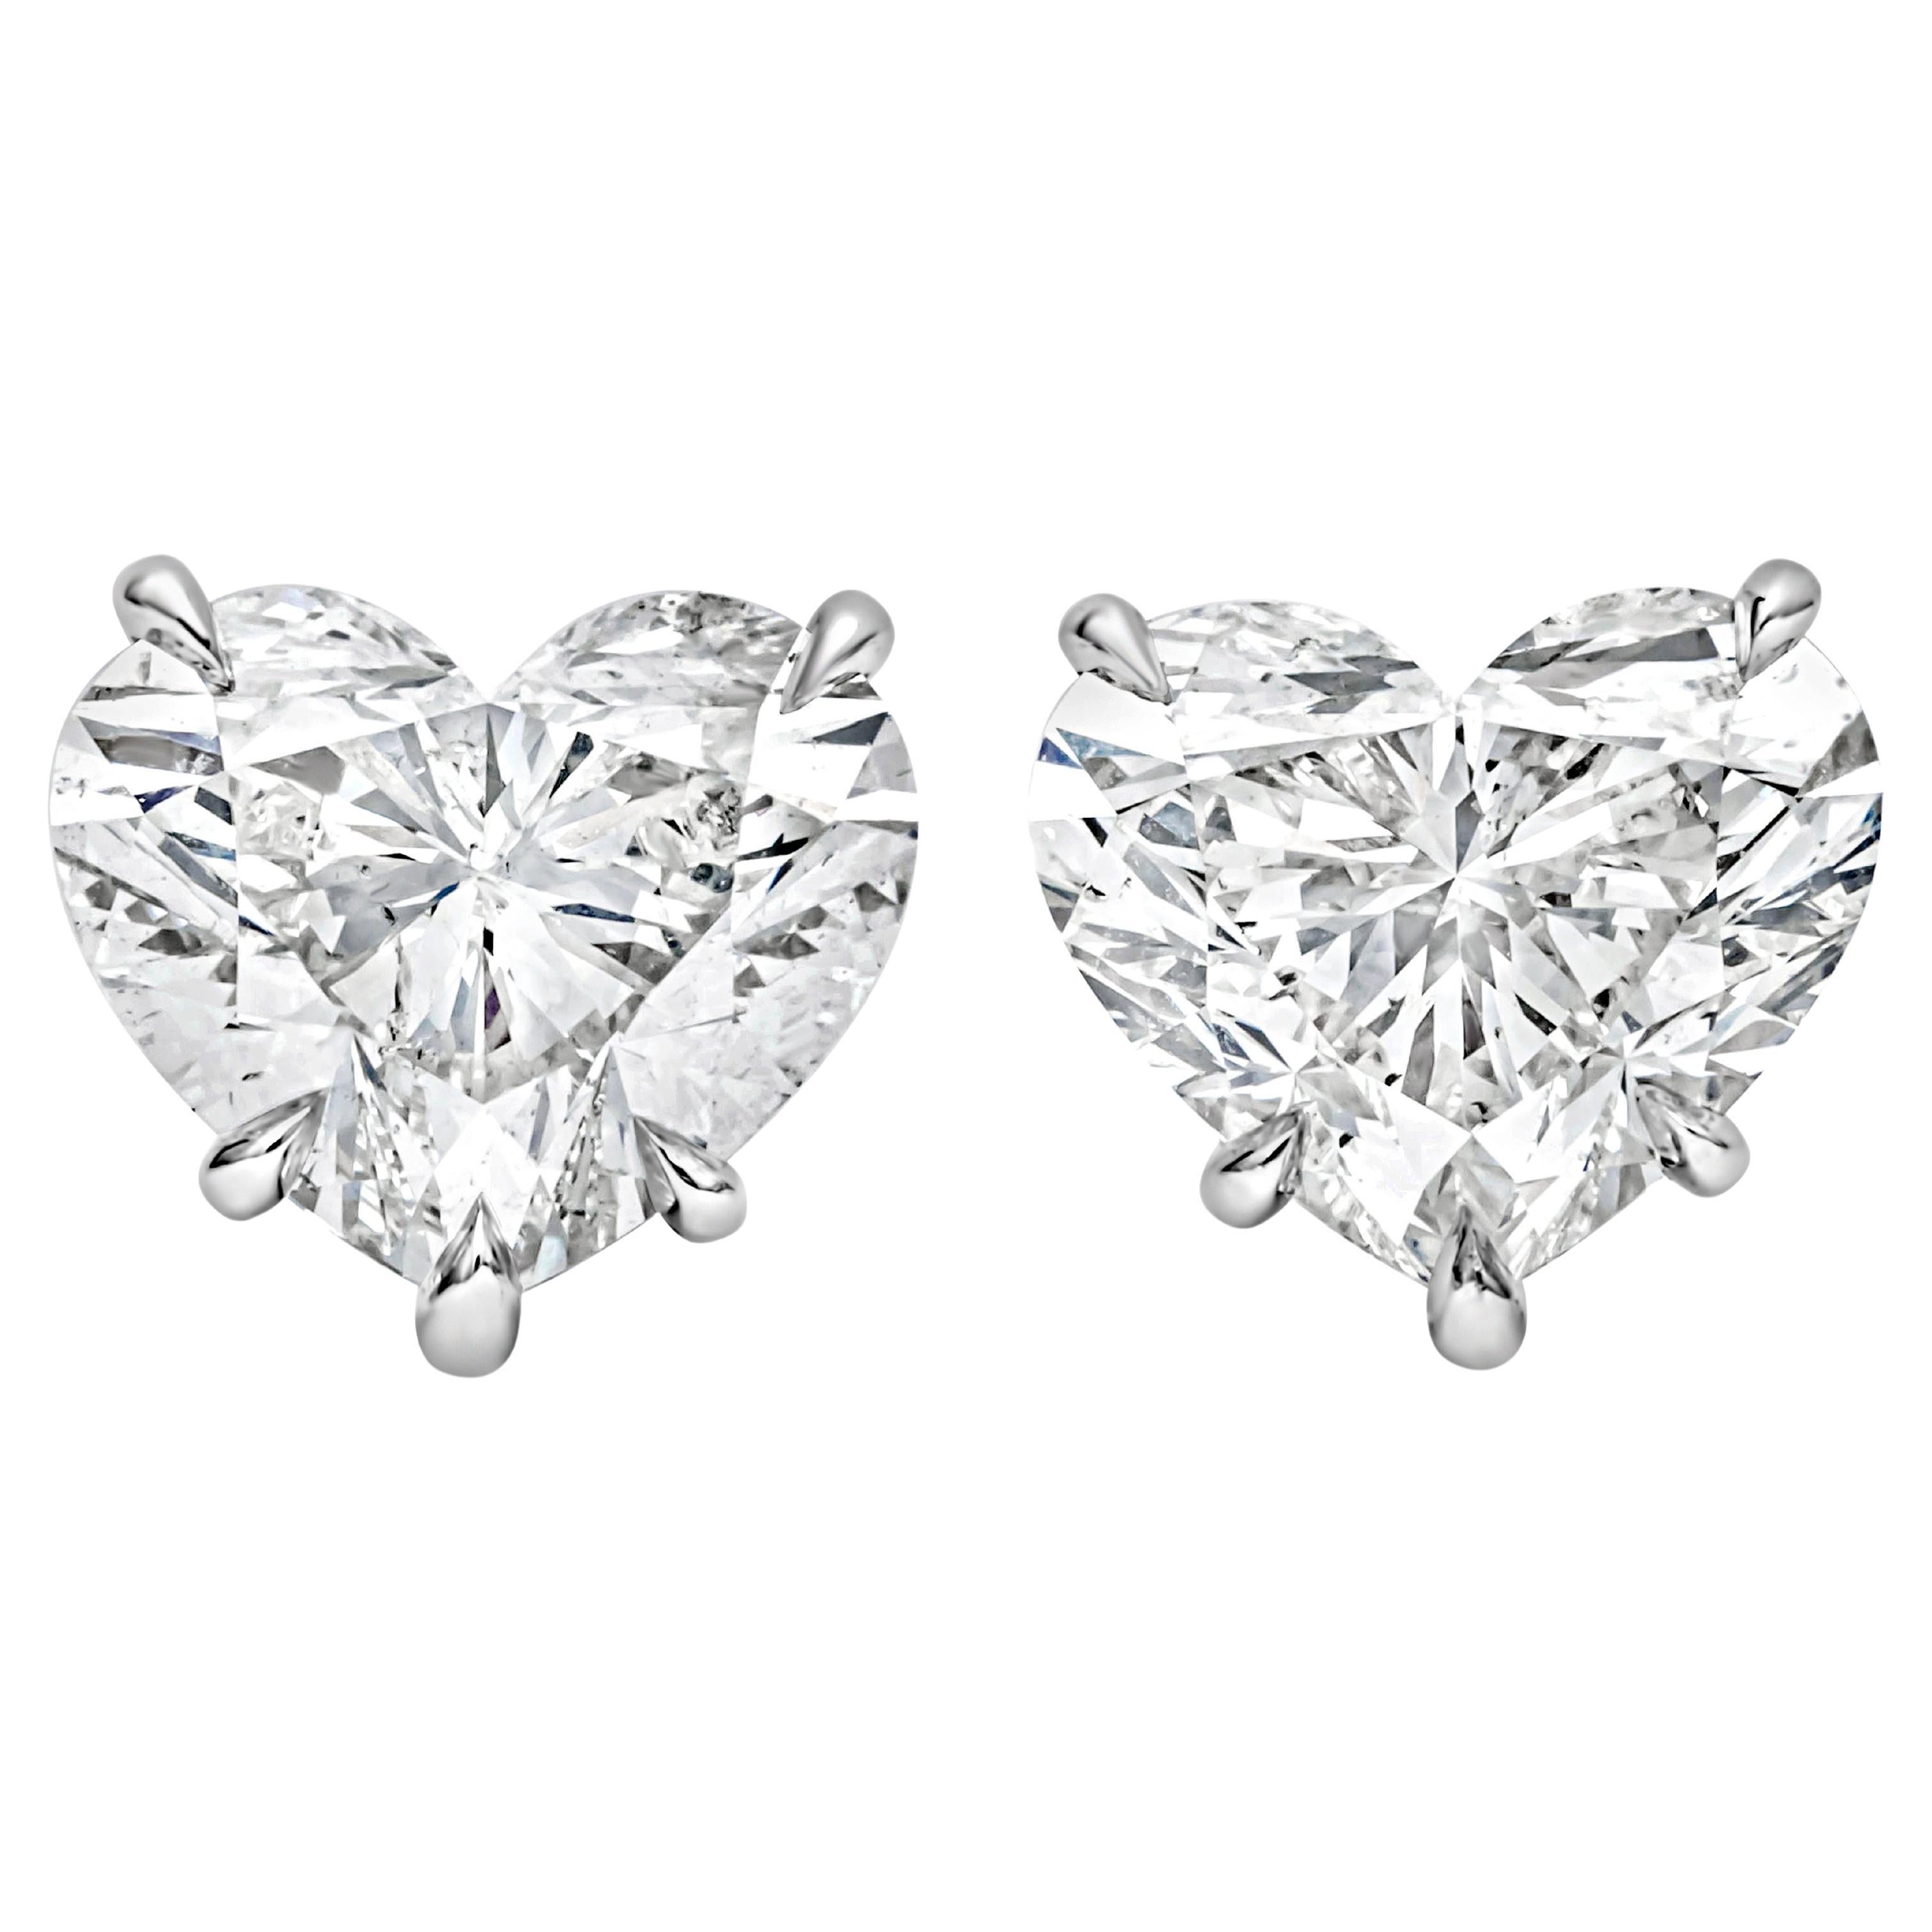 Roman Malakov GIA Certified 6.03 Carats Total Heart Shape Diamond Stud Earrings For Sale